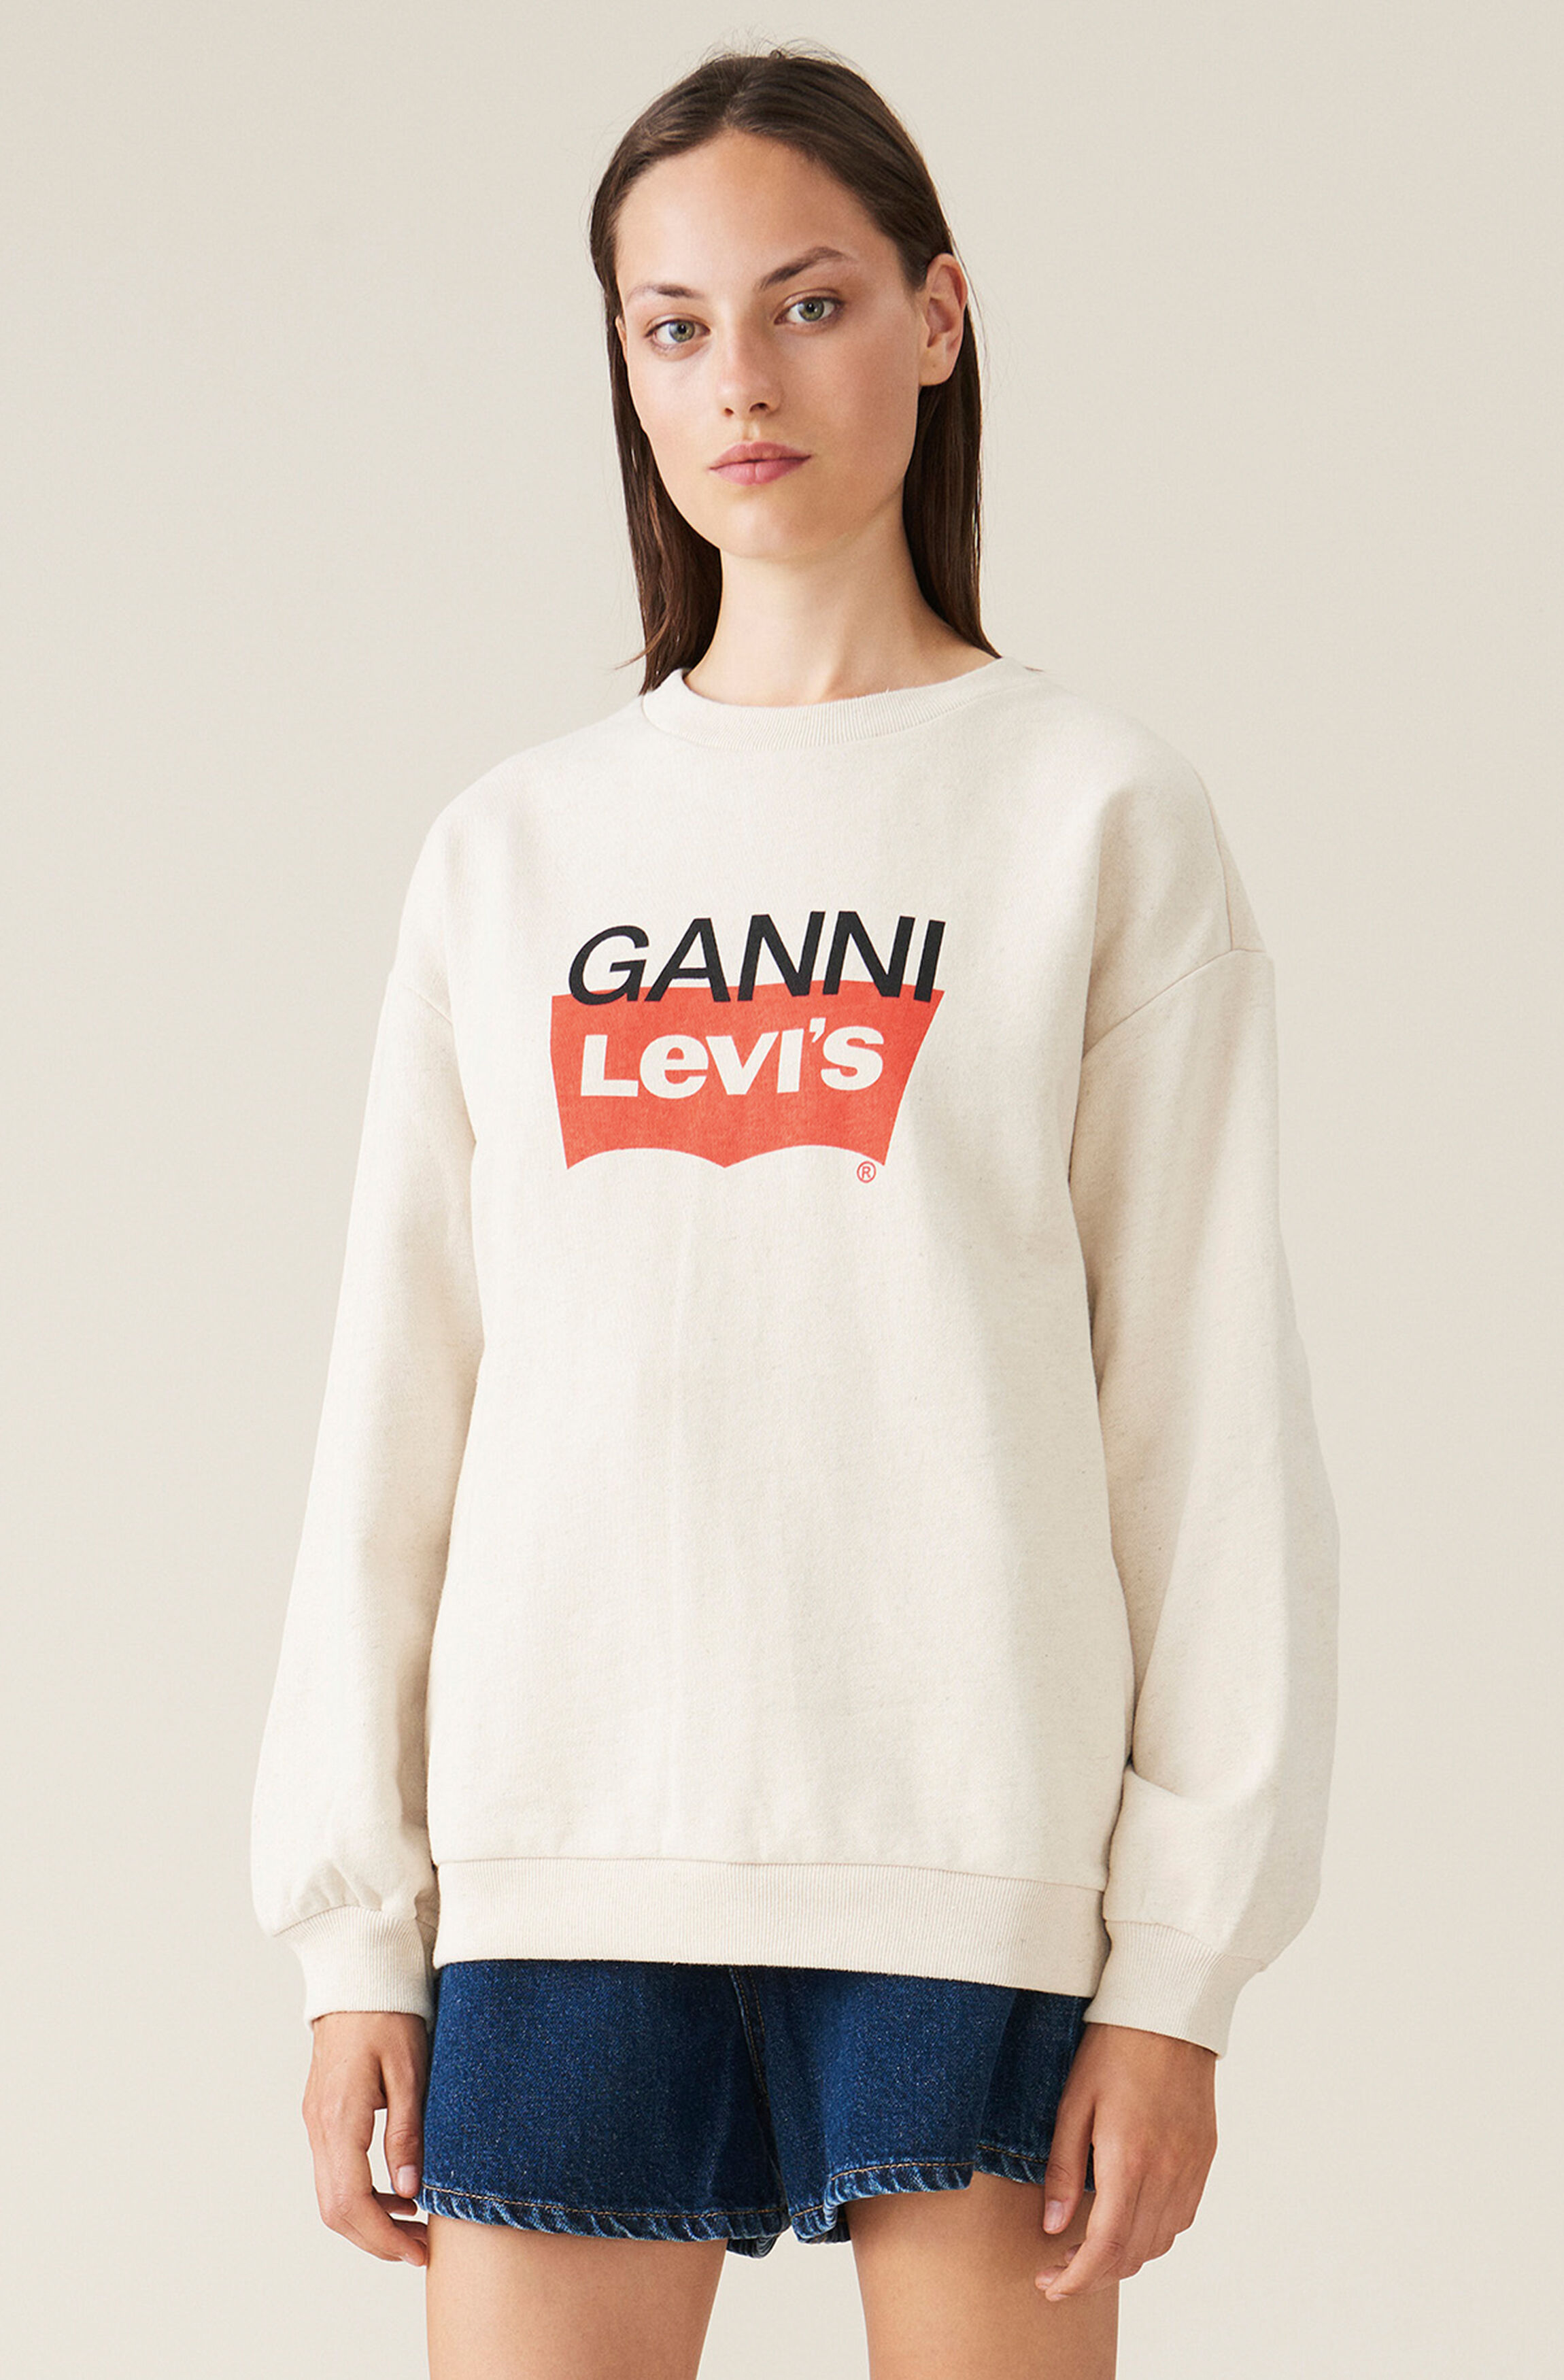 ganni boss lady sweatshirt